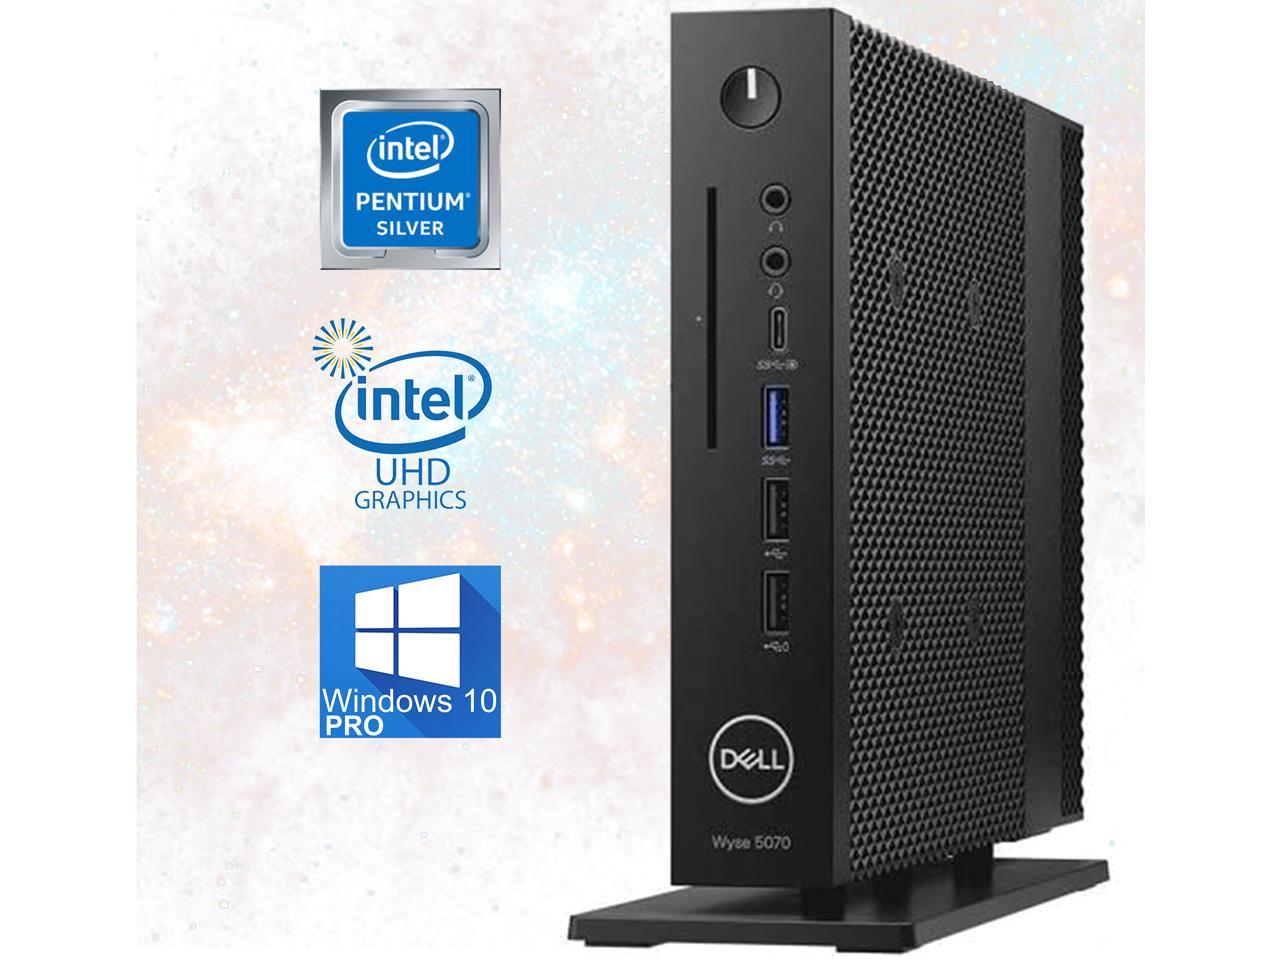 Dell 5070 USFF, Quad Core Pentium Silver upto 2.80GHz, 8GB DDR4, 512GB M.2 SSD, USB 3.1, WiFi, Bluetooth, 4K UHD 3-Monitor Support, Display Port, HDMI, Windows 10 Pro